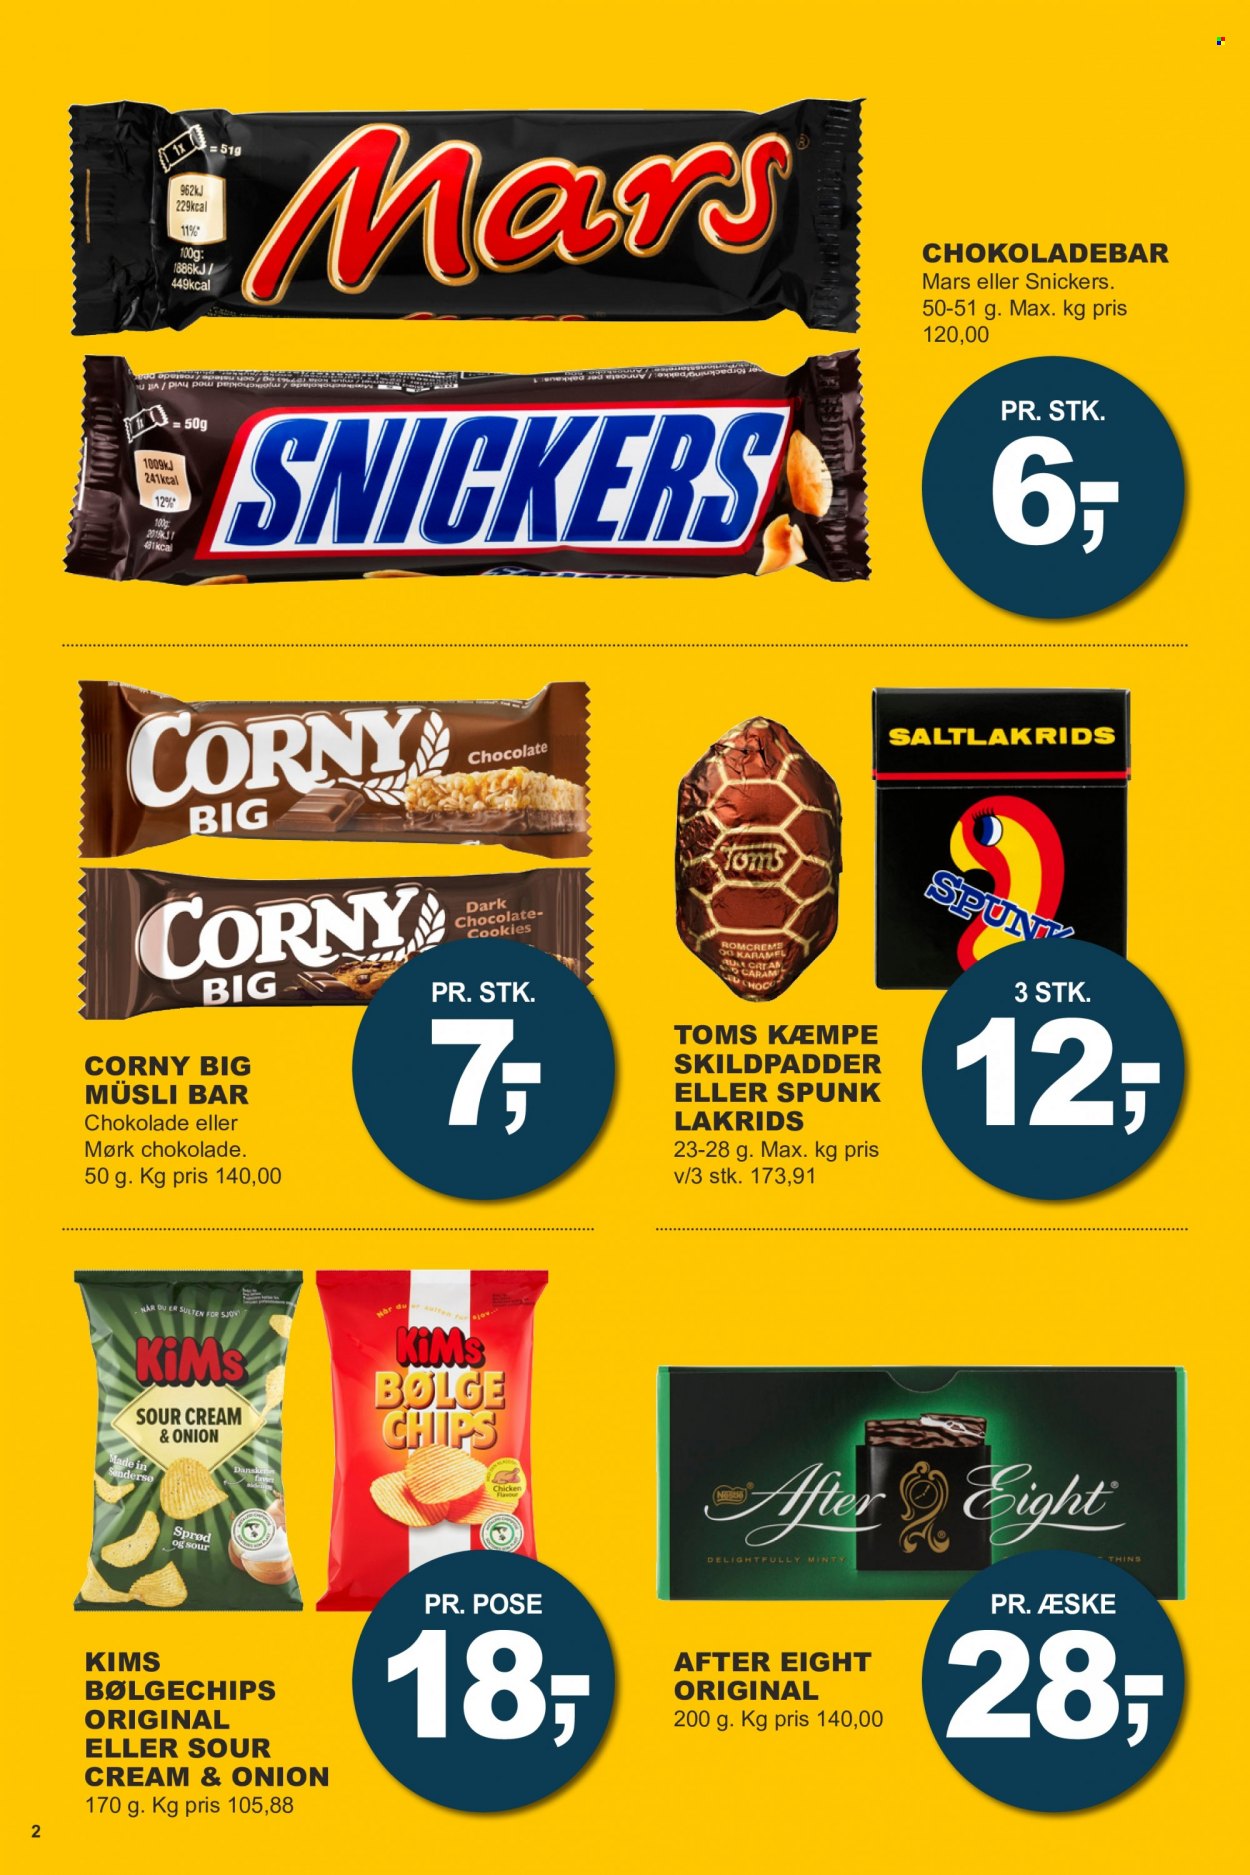 thumbnail - Let-Køb tilbud  - 13.9.2021 - 26.9.2021 - tilbudsprodukter - After Eight, cookies, chokolade, karamel, lakrids, Snickers, Toms, chokoladebar, Mars, chips, Corny, müsli, müsli bar. Side 2.